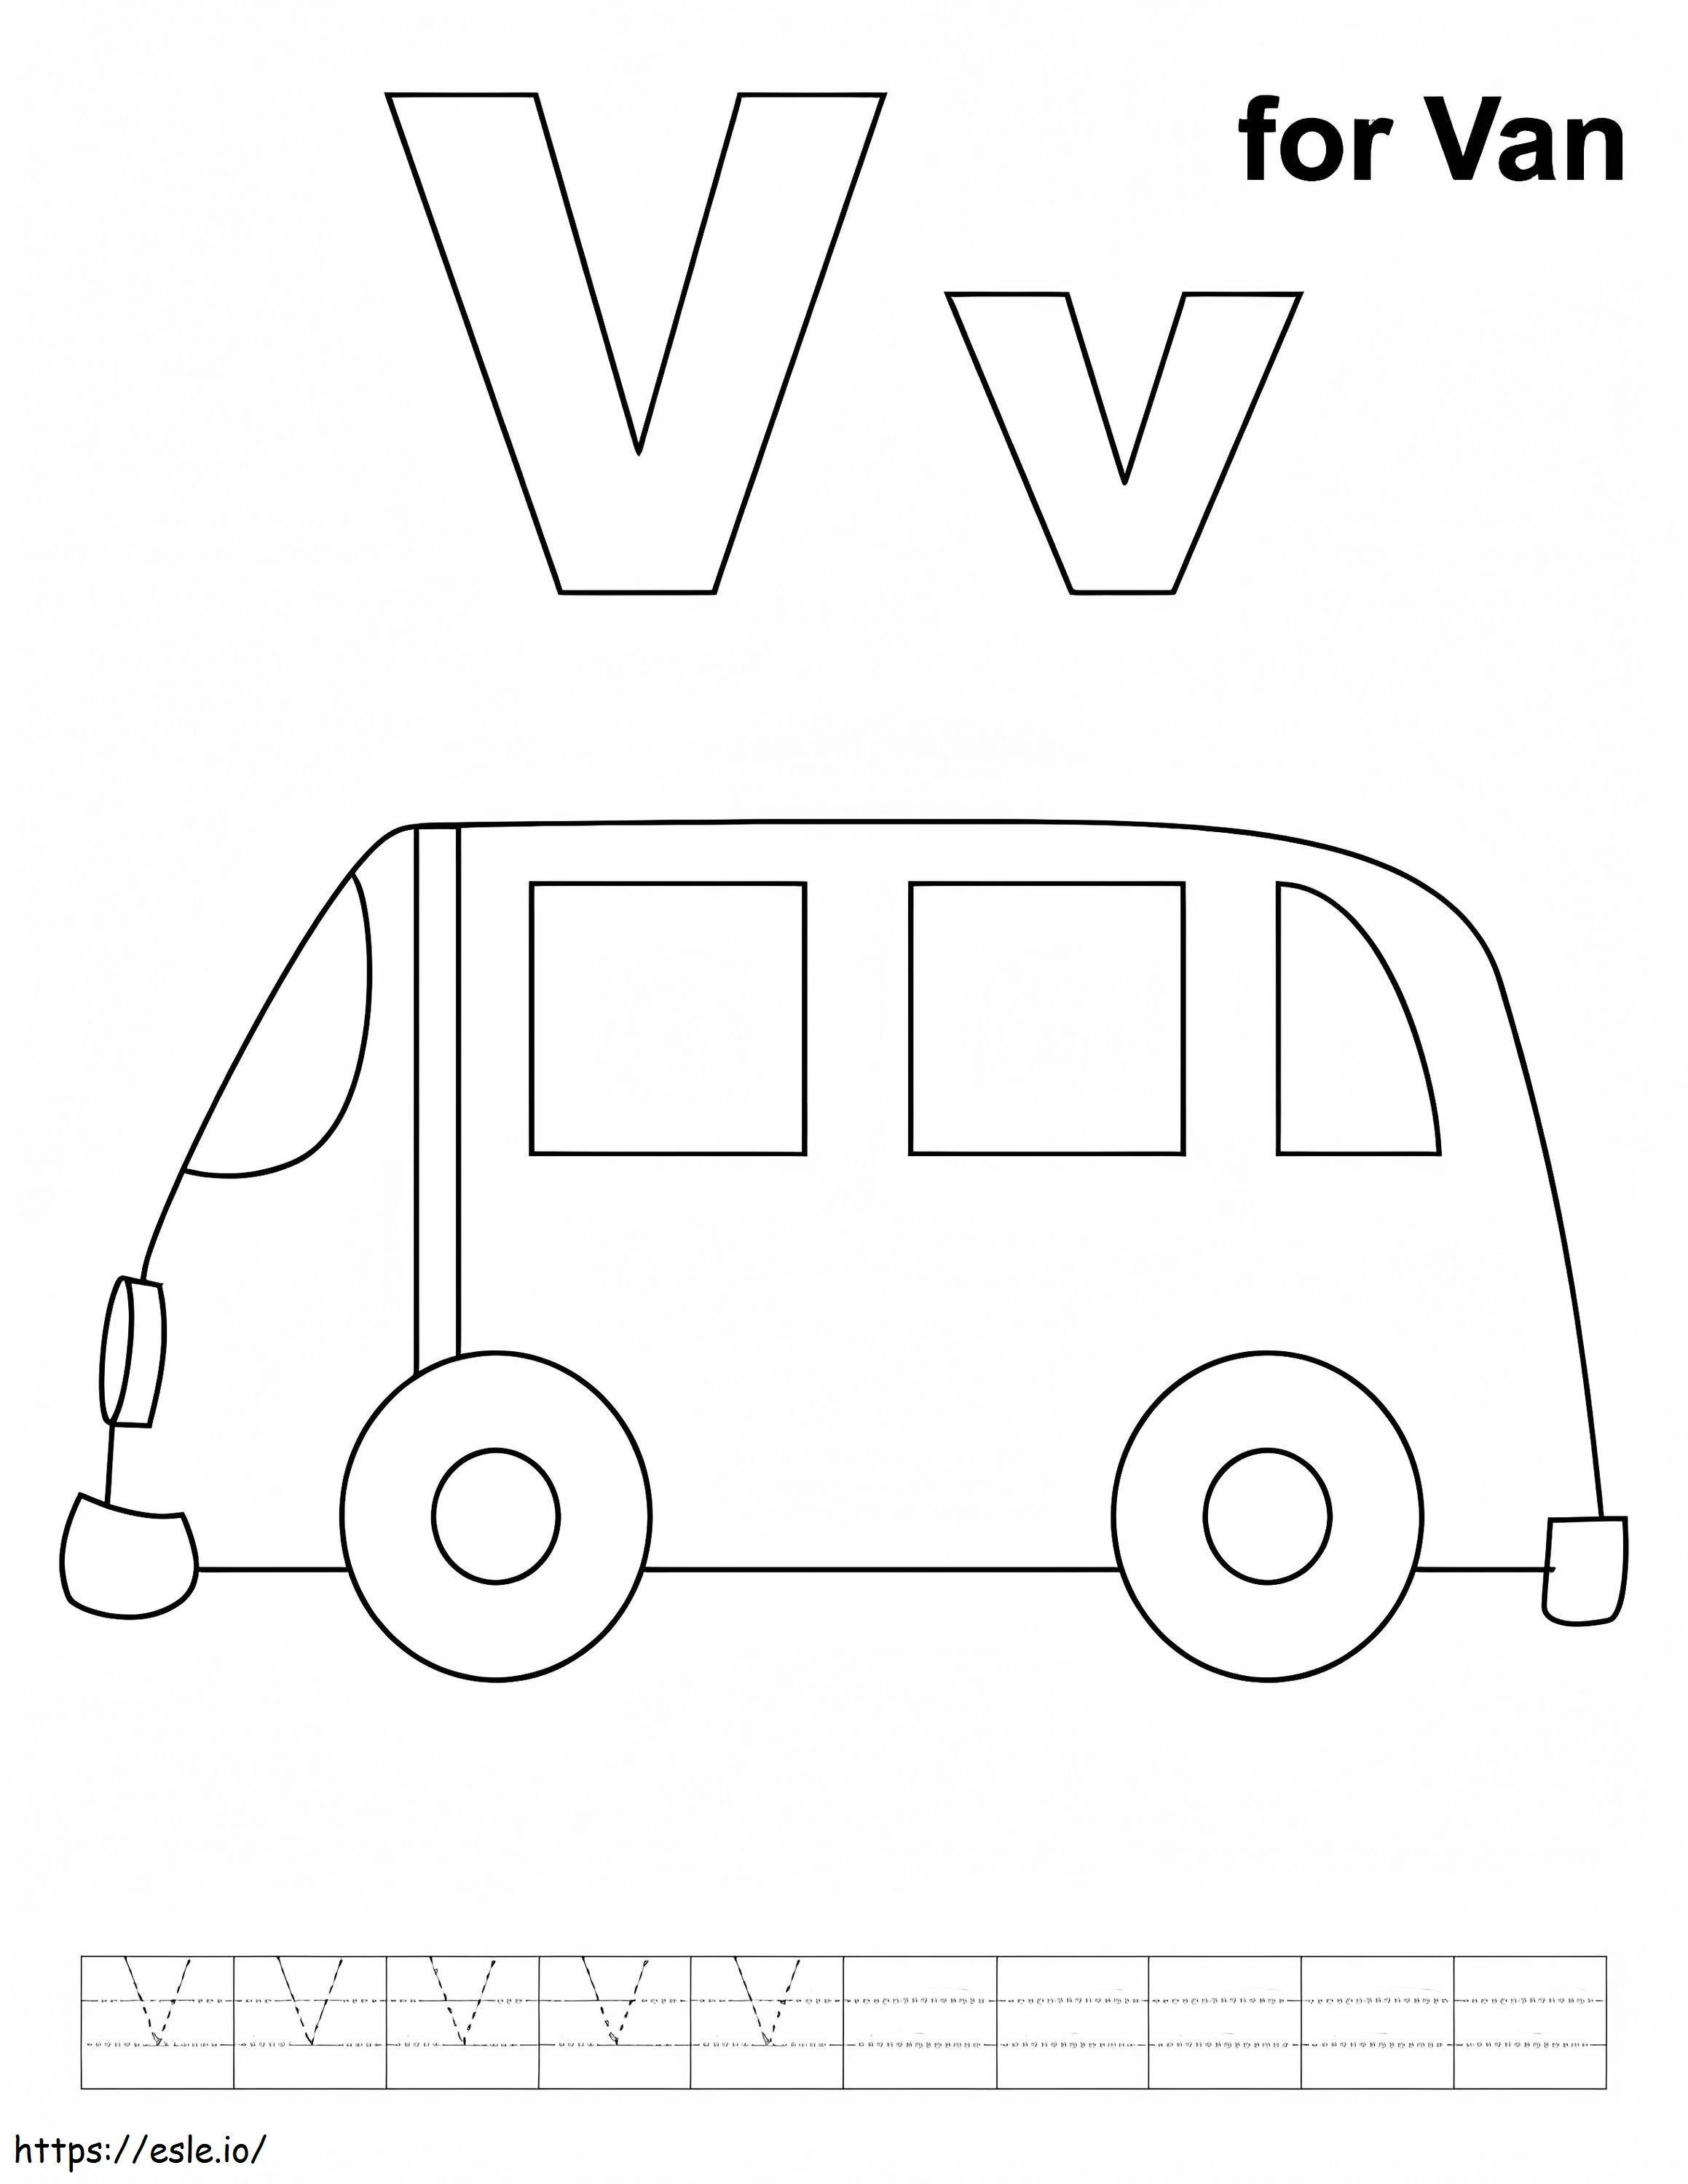 V jest dla vana kolorowanka